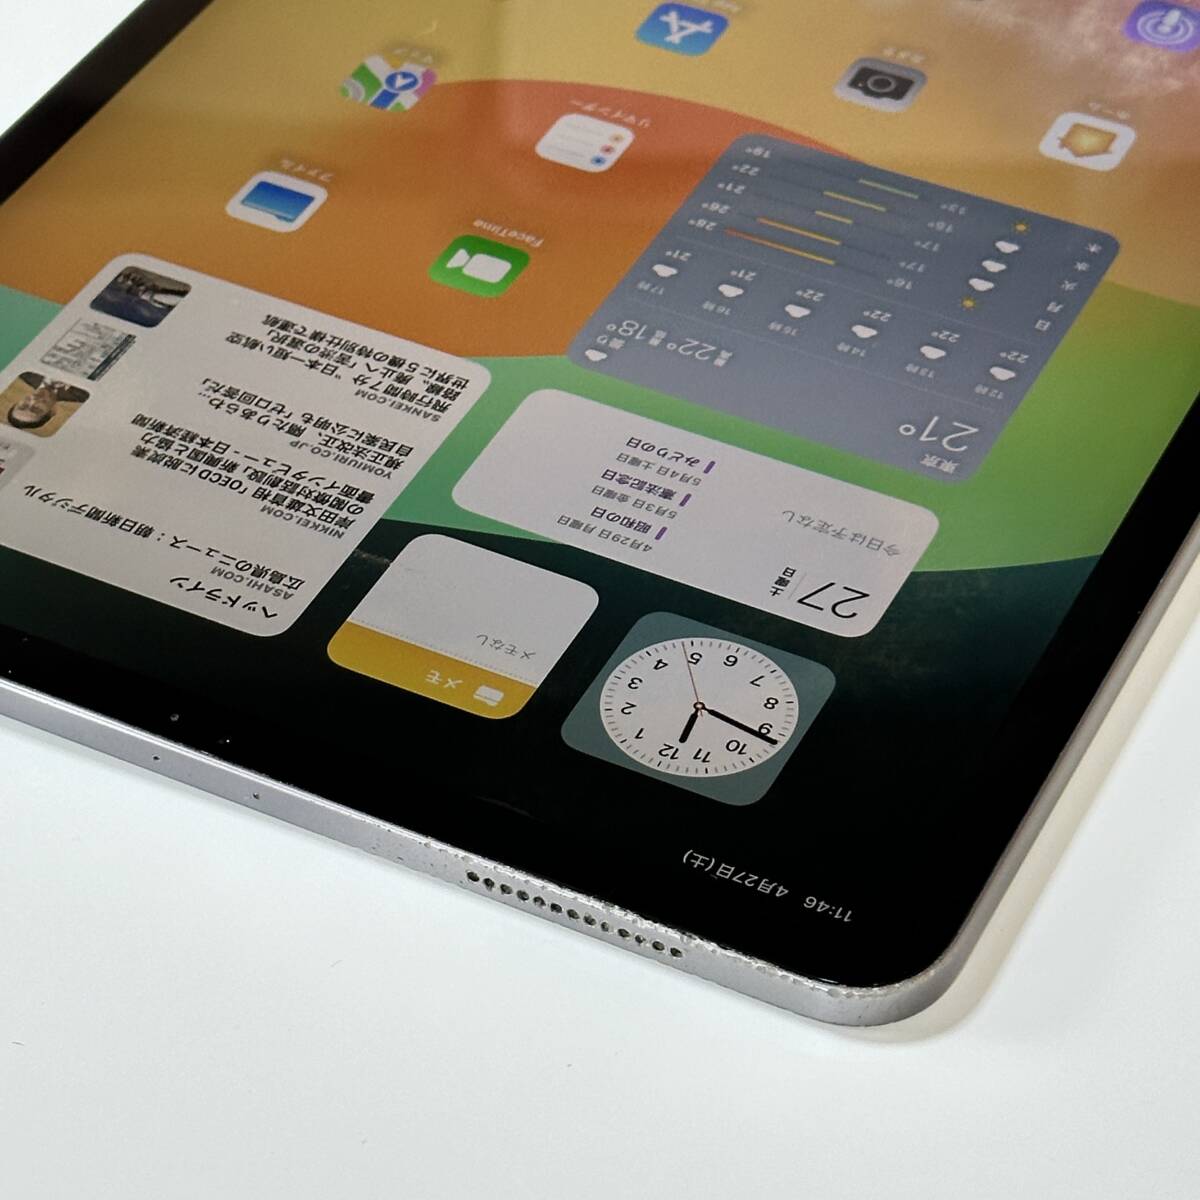 Apple iPad Pro (11 дюймовый ) Space серый 256GB FTXQ2J/A Wi-Fi модель iOS17.4.1 Acty беж .n разблокирован 